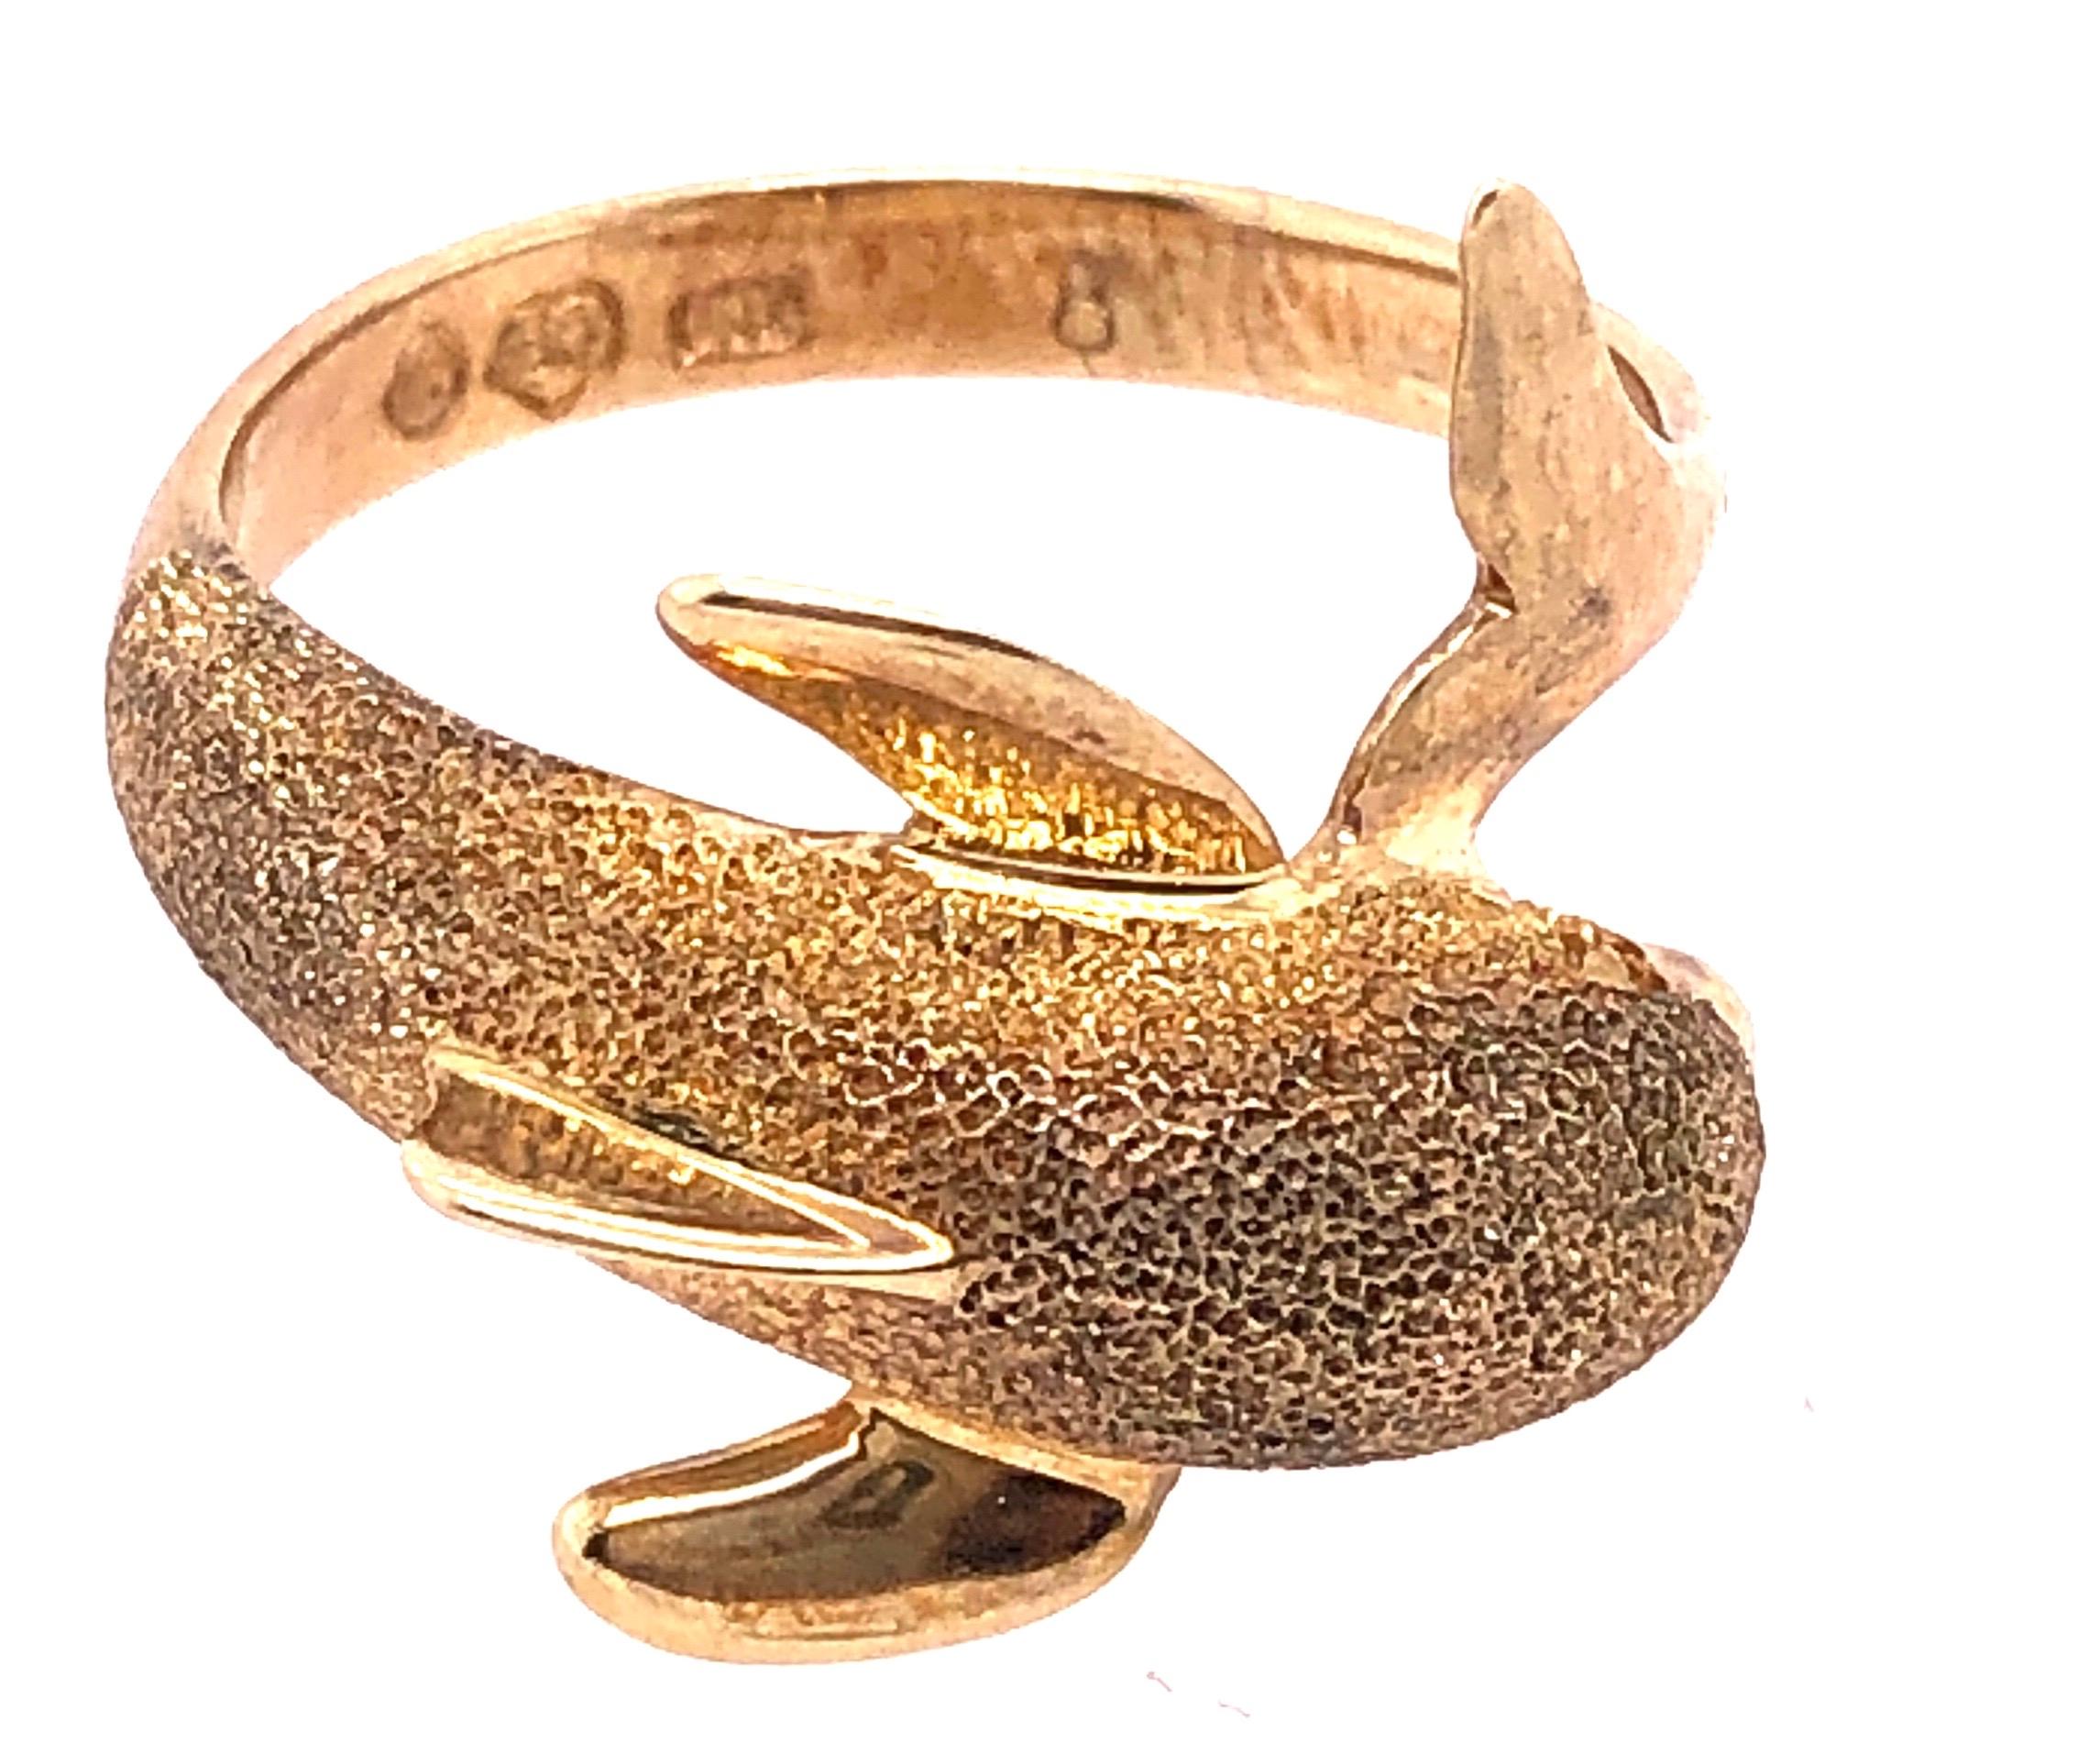 14 Karat Yellow Gold Fashion Dolphin Ring.
Size 8
5 grams total weight.